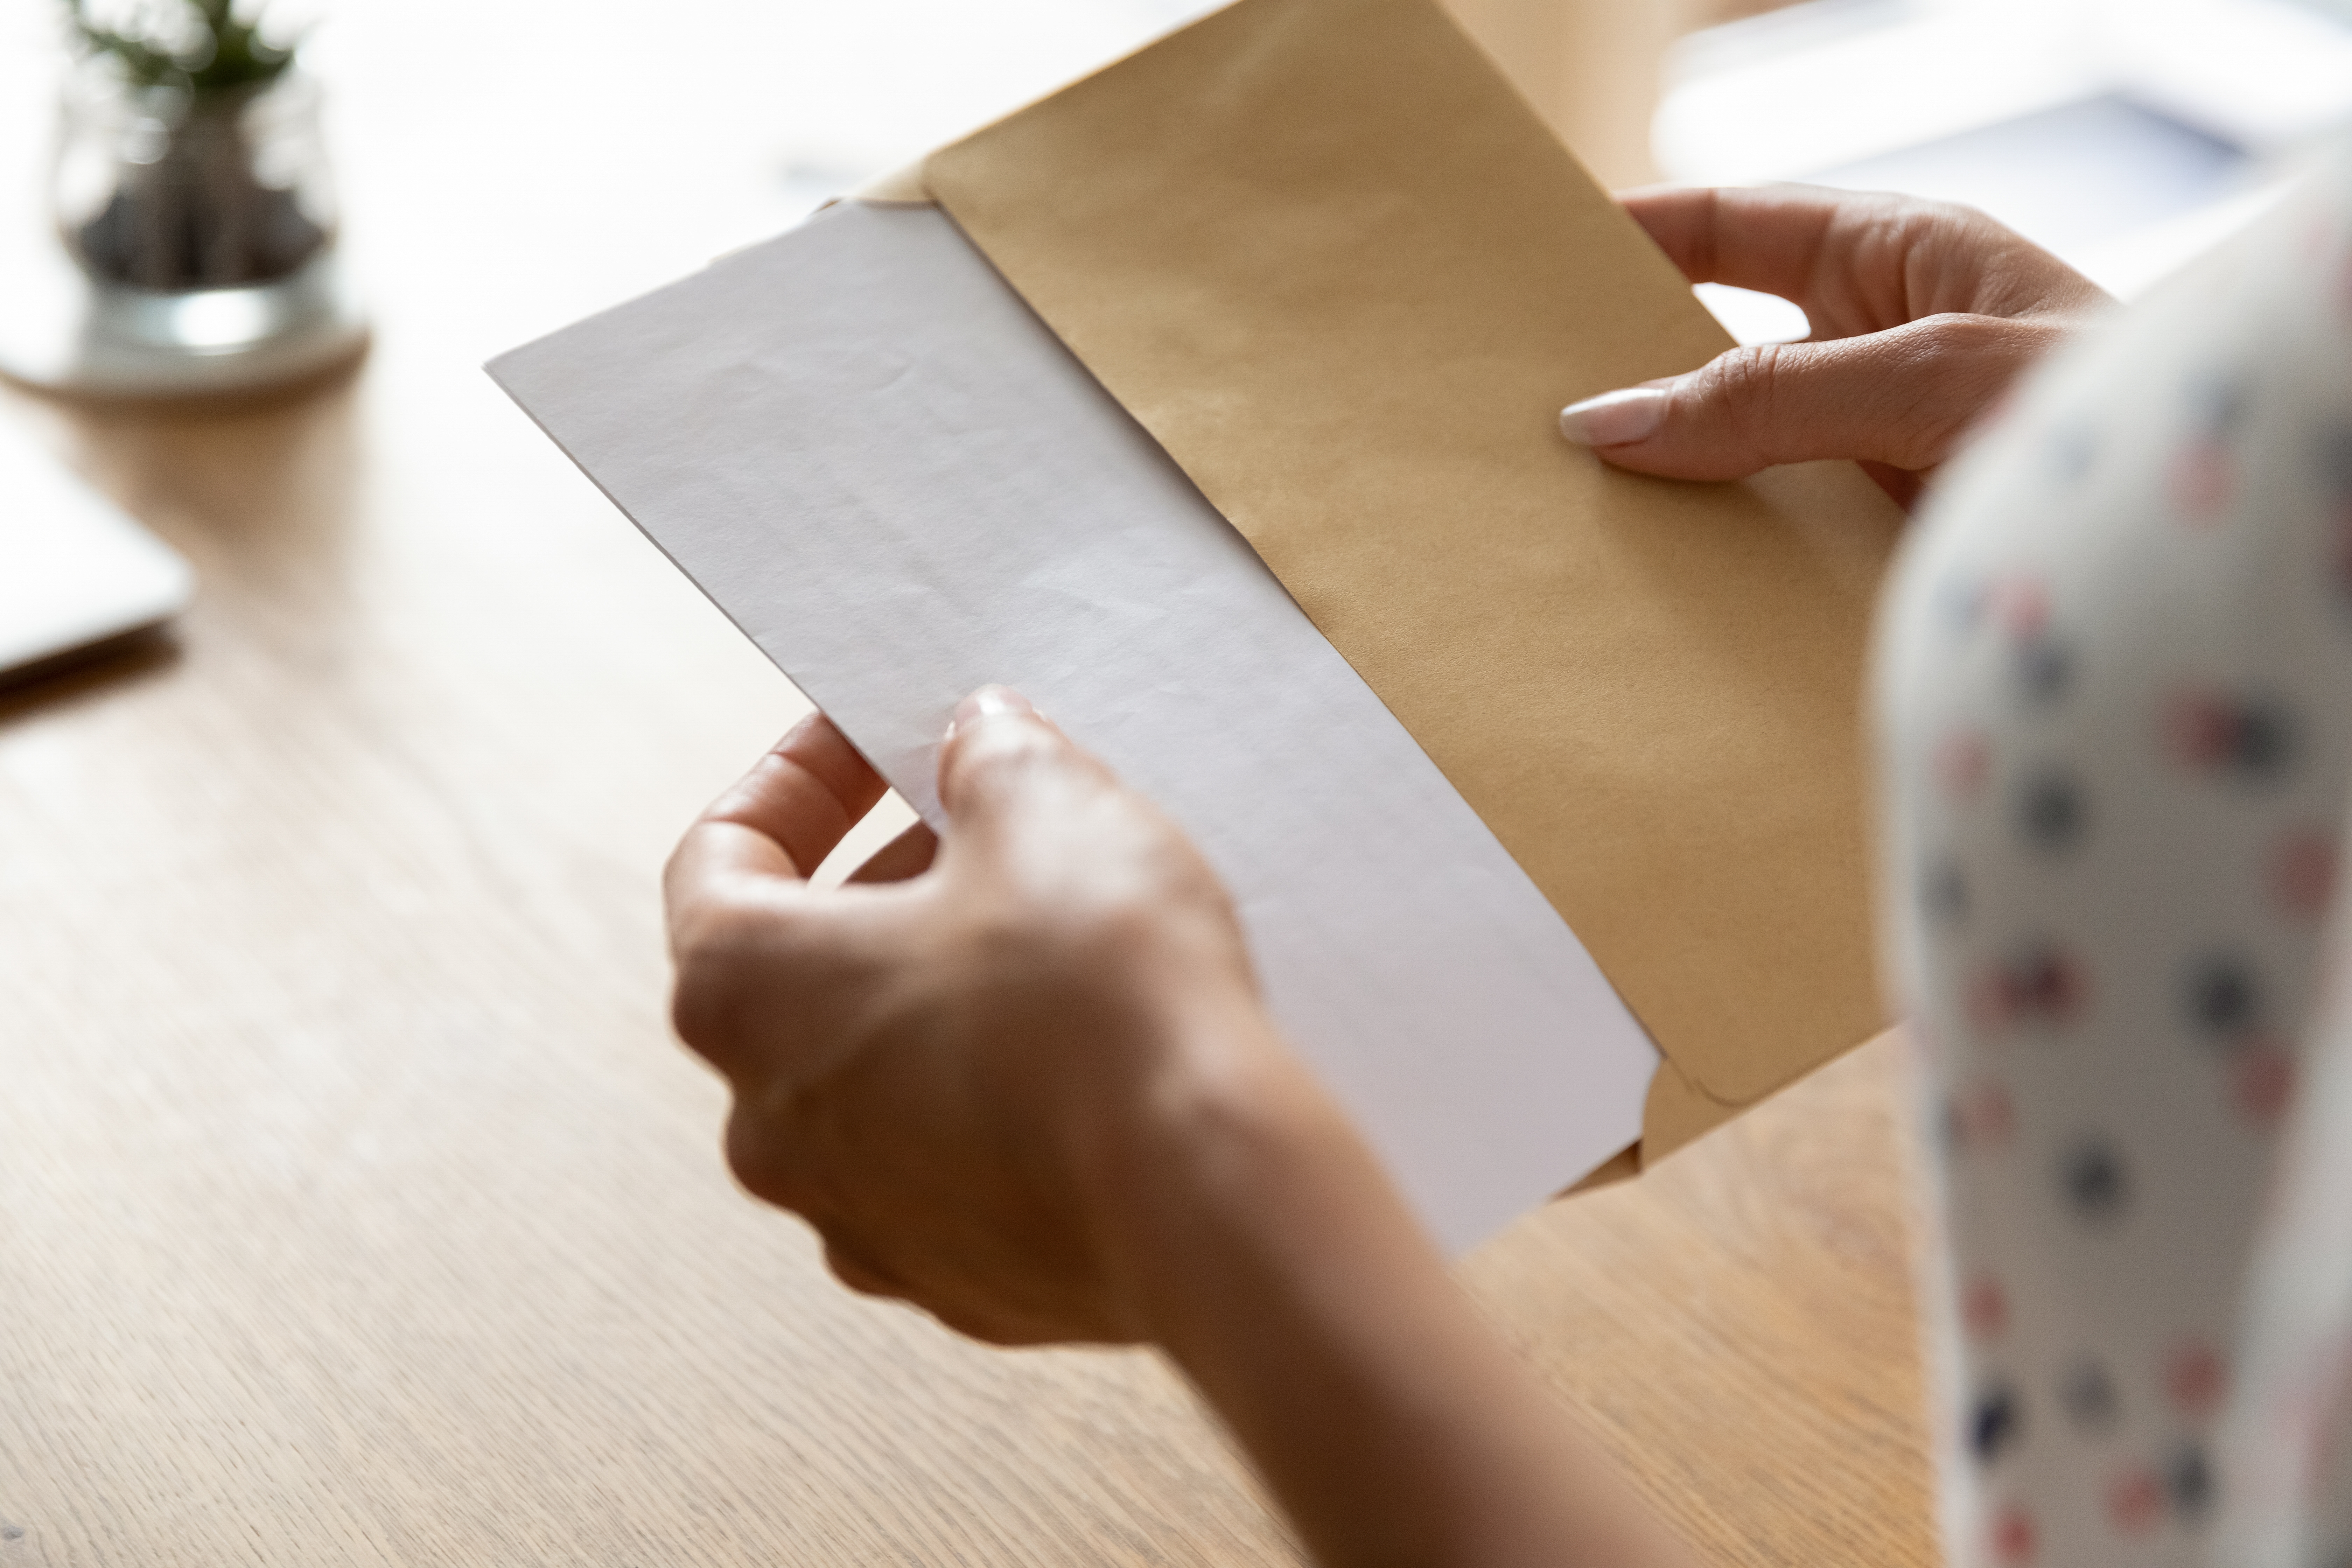 Hands of woman receiving letter | Source: Shutterstock